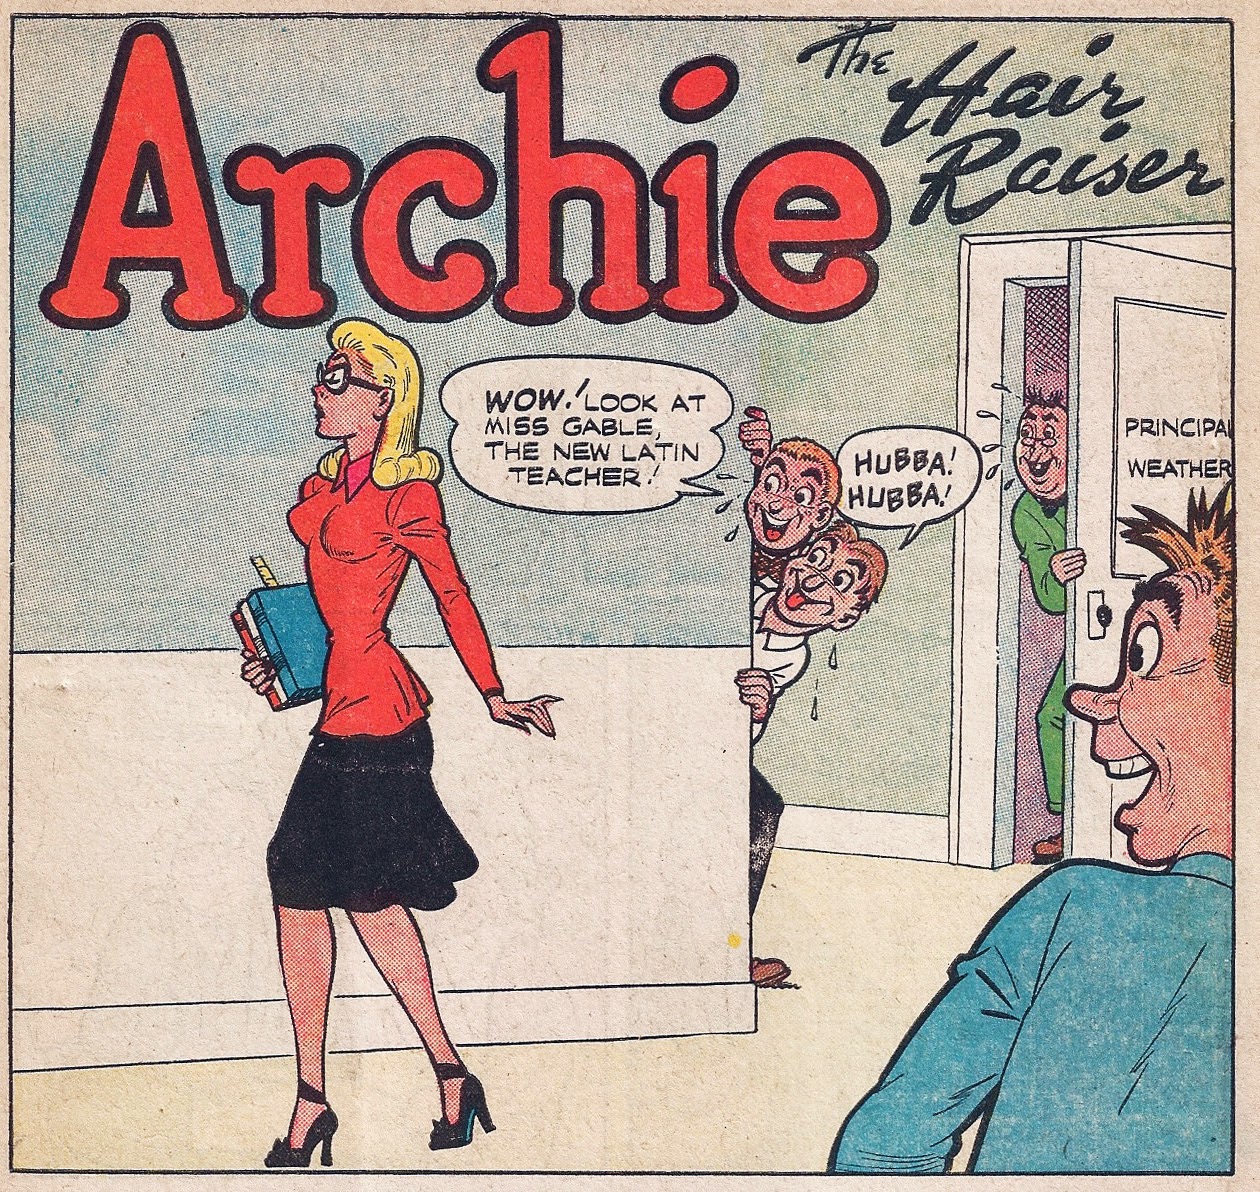 Undercover Archie